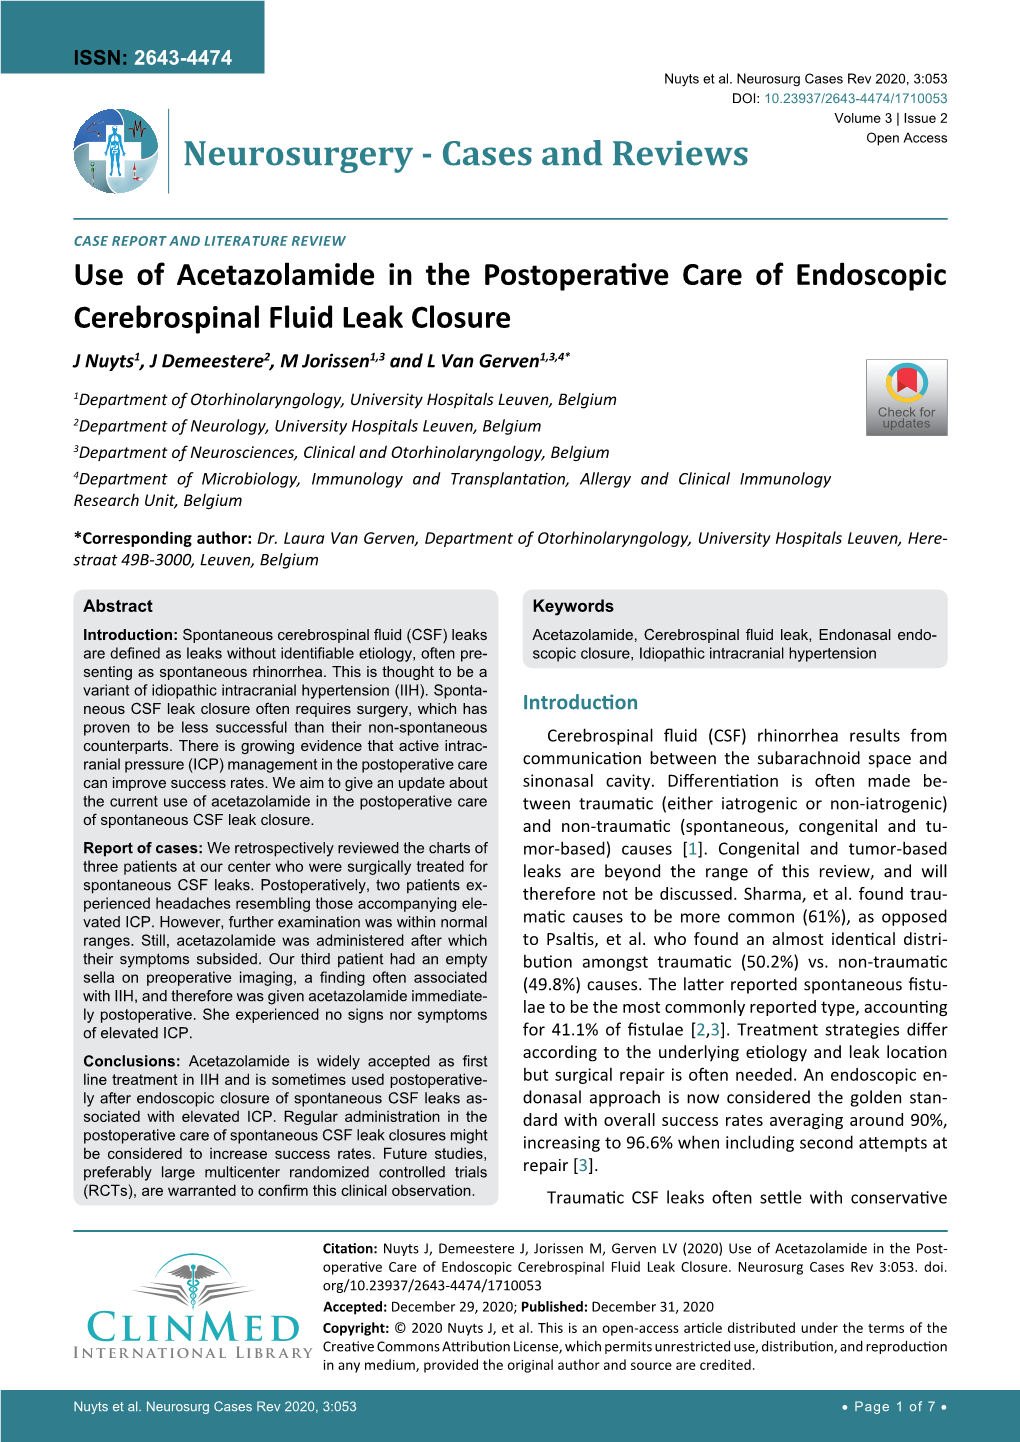 Use of Acetazolamide in the Postoperative Care of Endoscopic Cerebrospinal Fluid Leak Closure J Nuyts1, J Demeestere2, M Jorissen1,3 and L Van Gerven1,3,4*